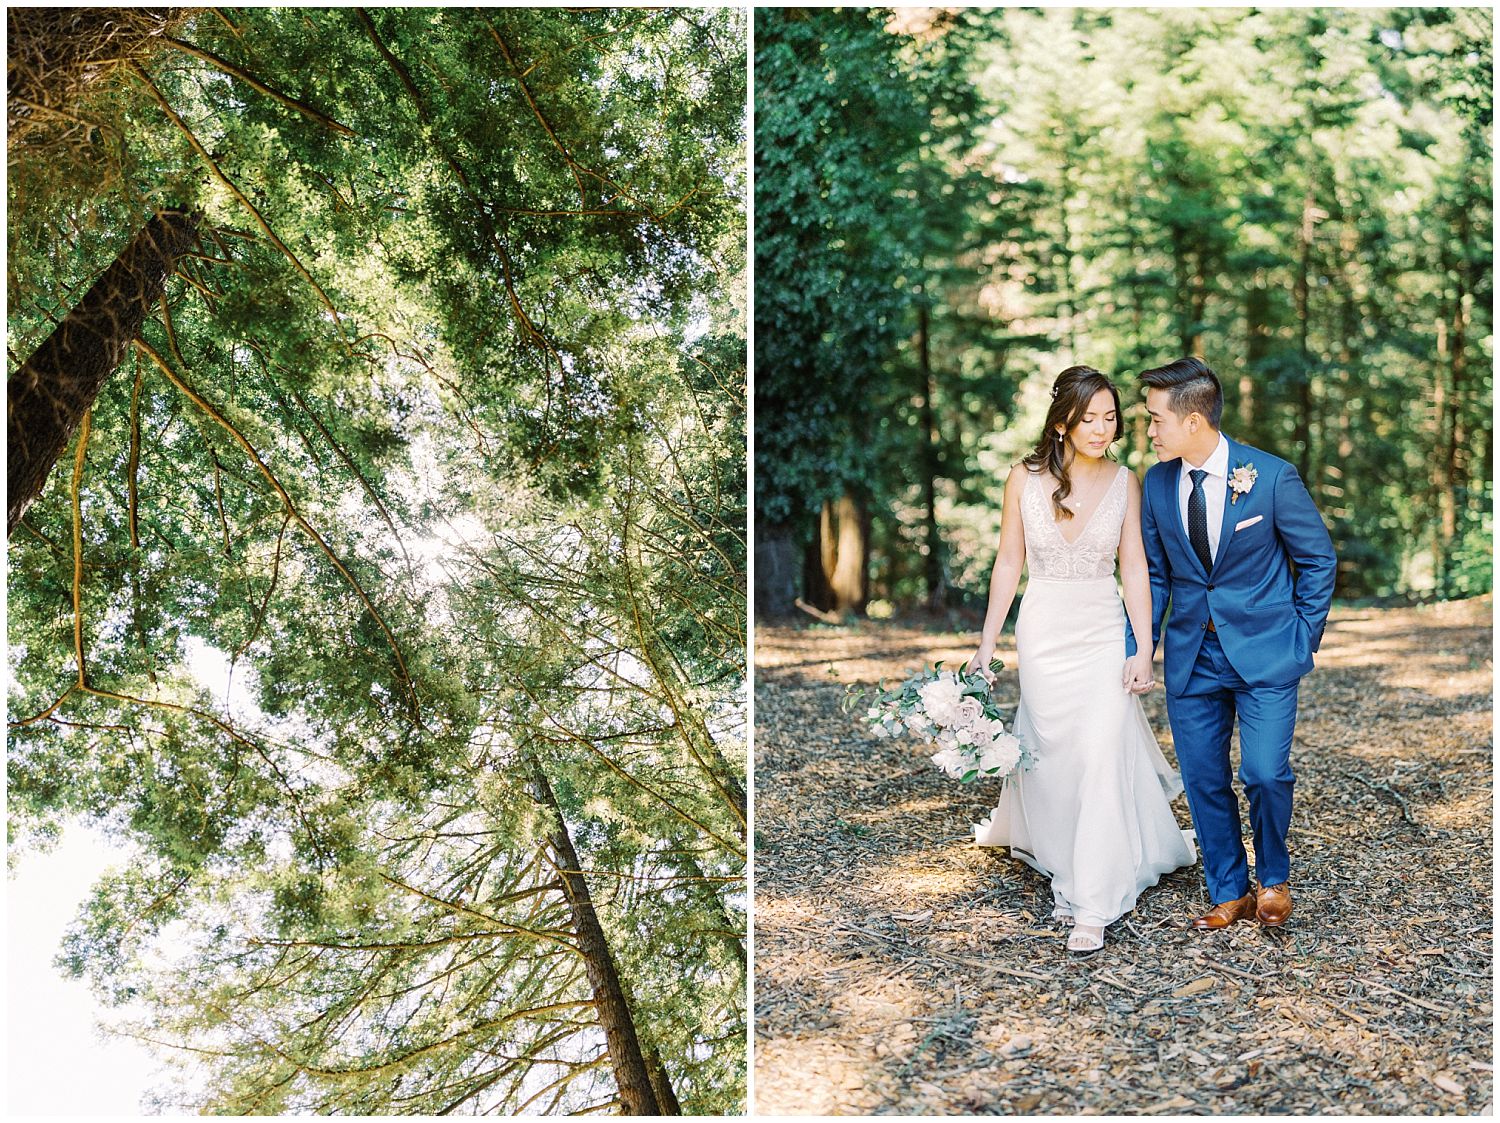 The Mountain Terrace Woodside California wedding photographer